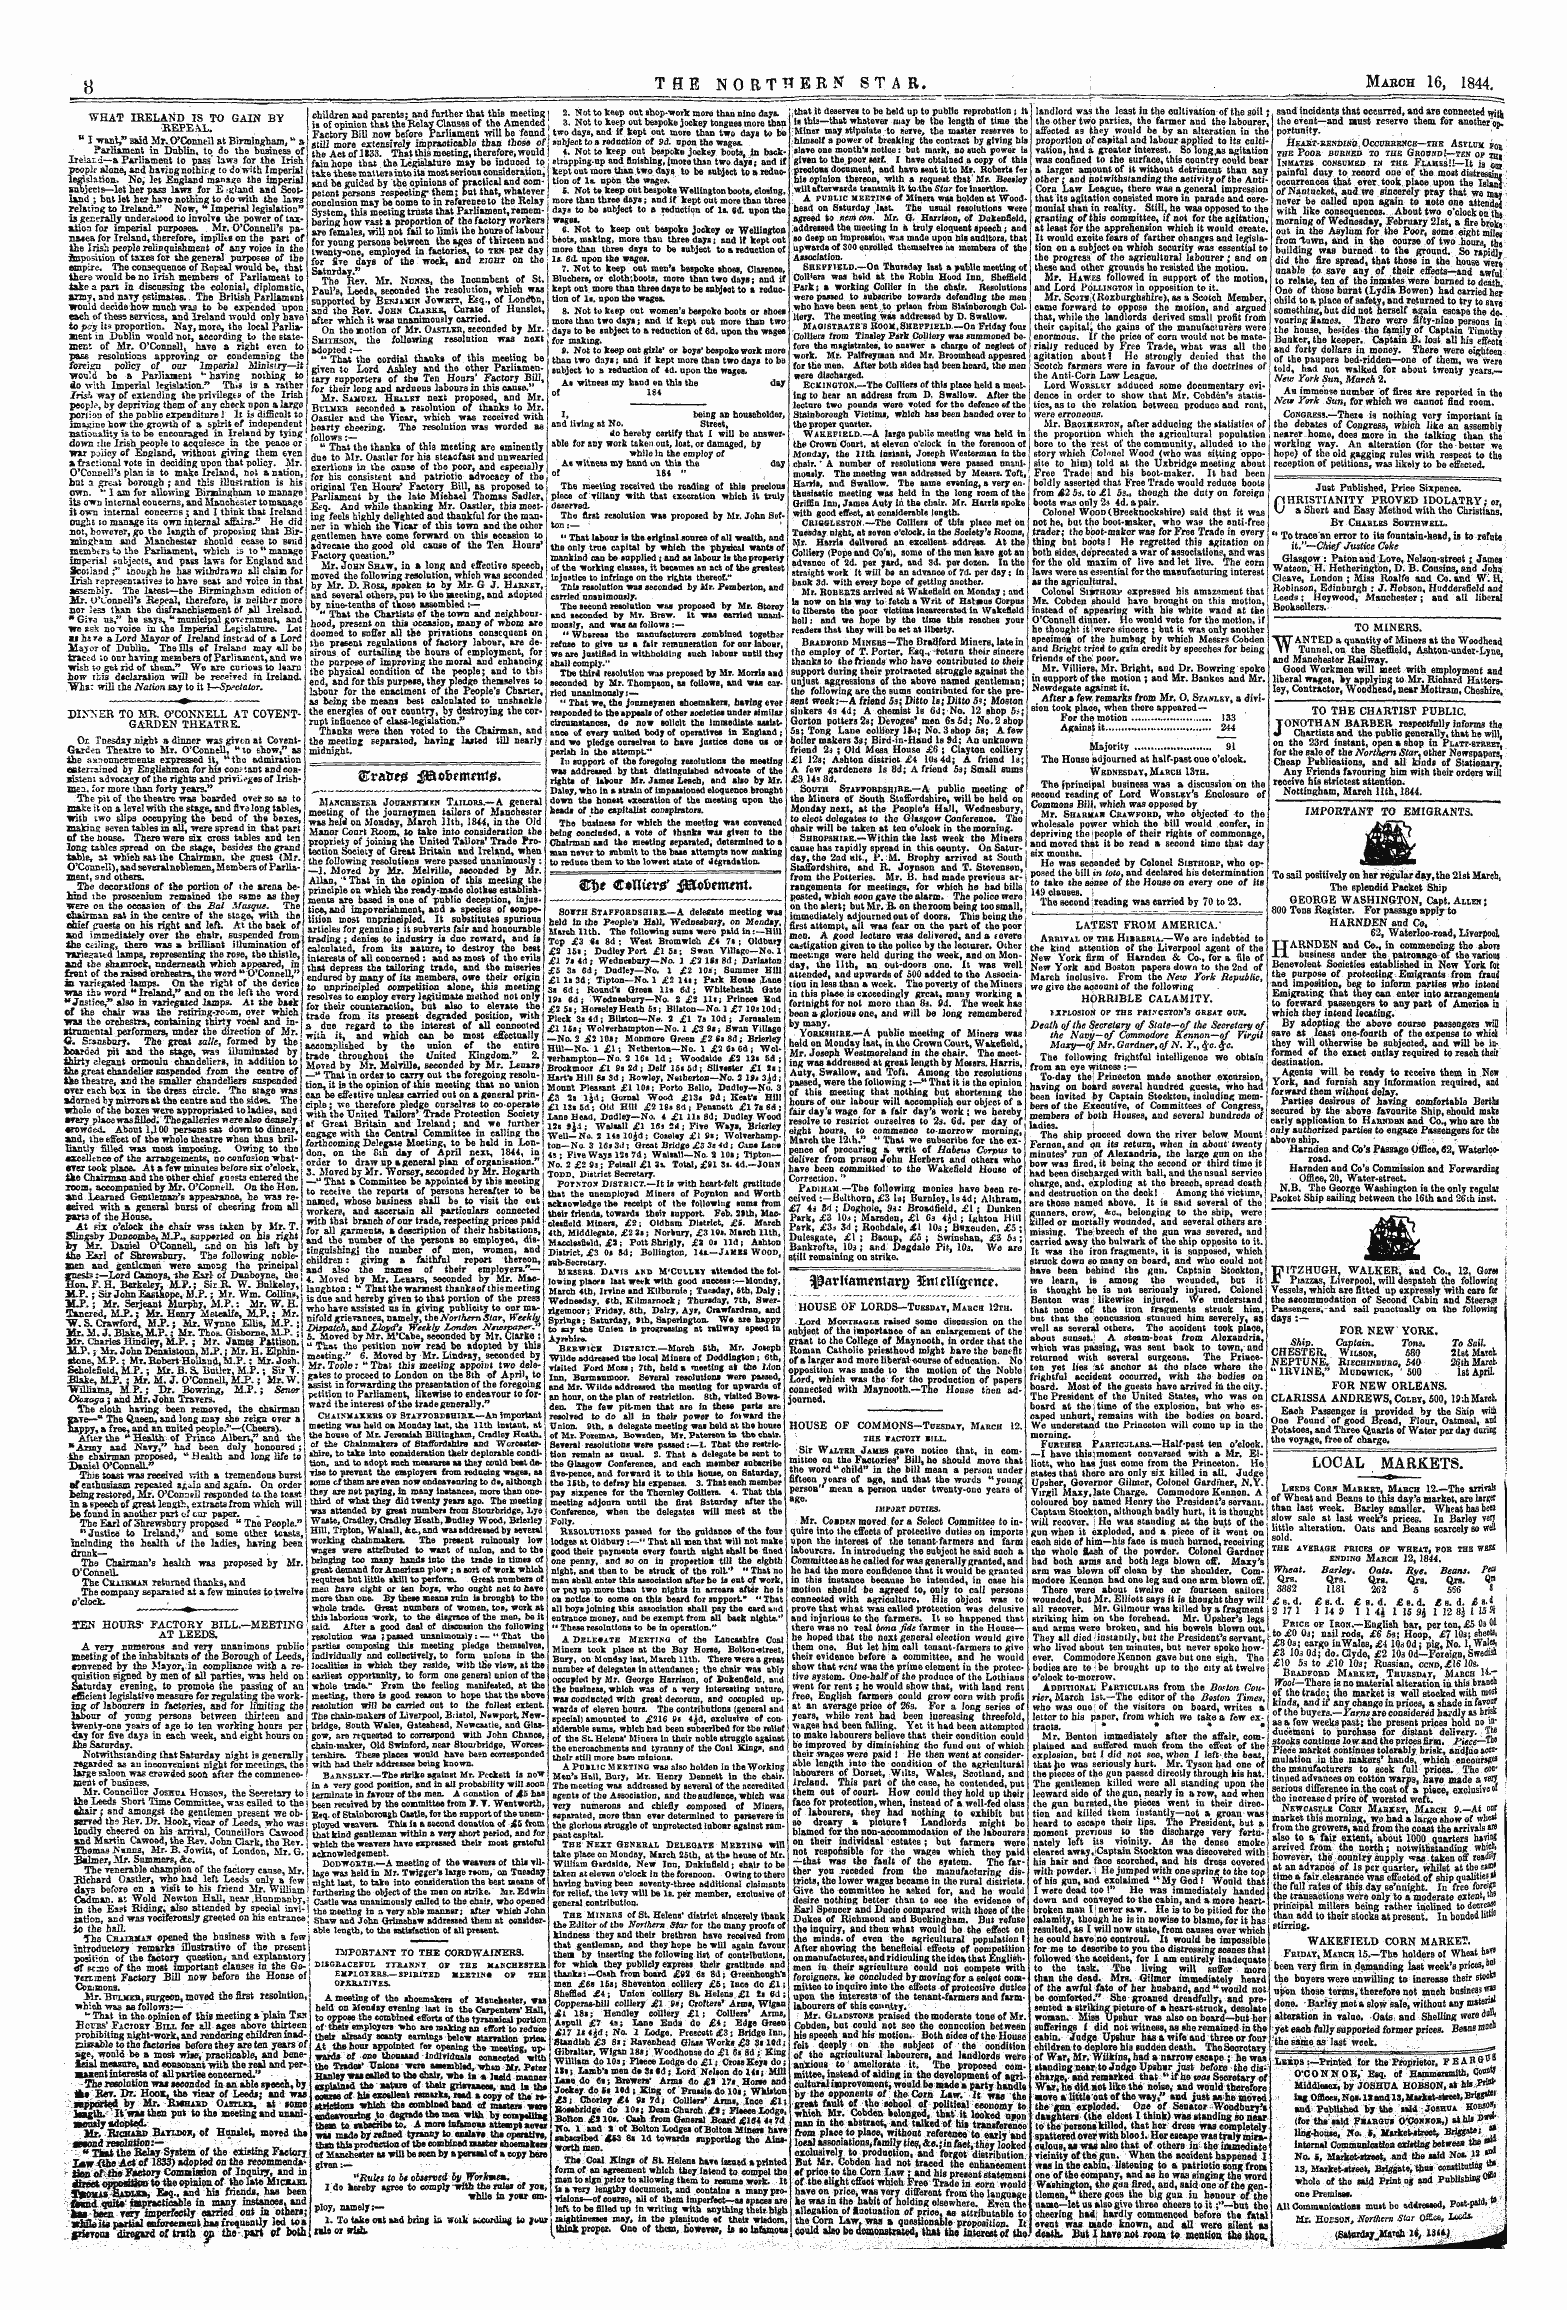 Northern Star (1837-1852): jS F Y, 1st edition - ^Arhamentatp 3enidl%F«Te.